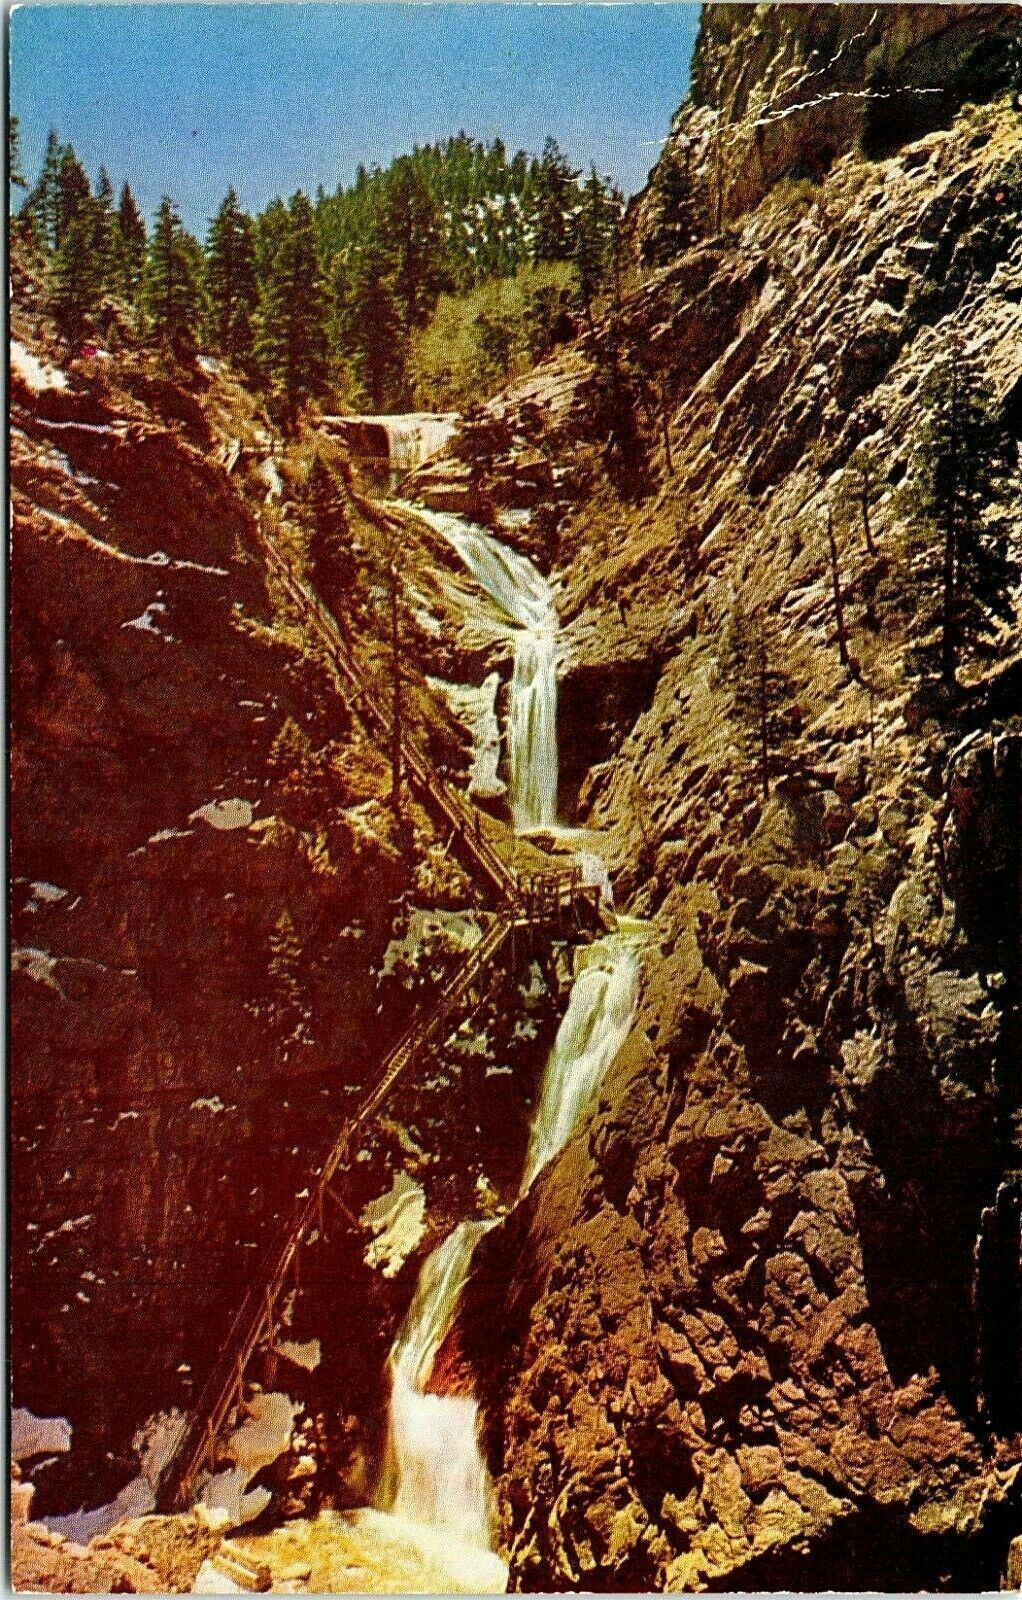 Seven Falls near Colorado Springs, Colorado